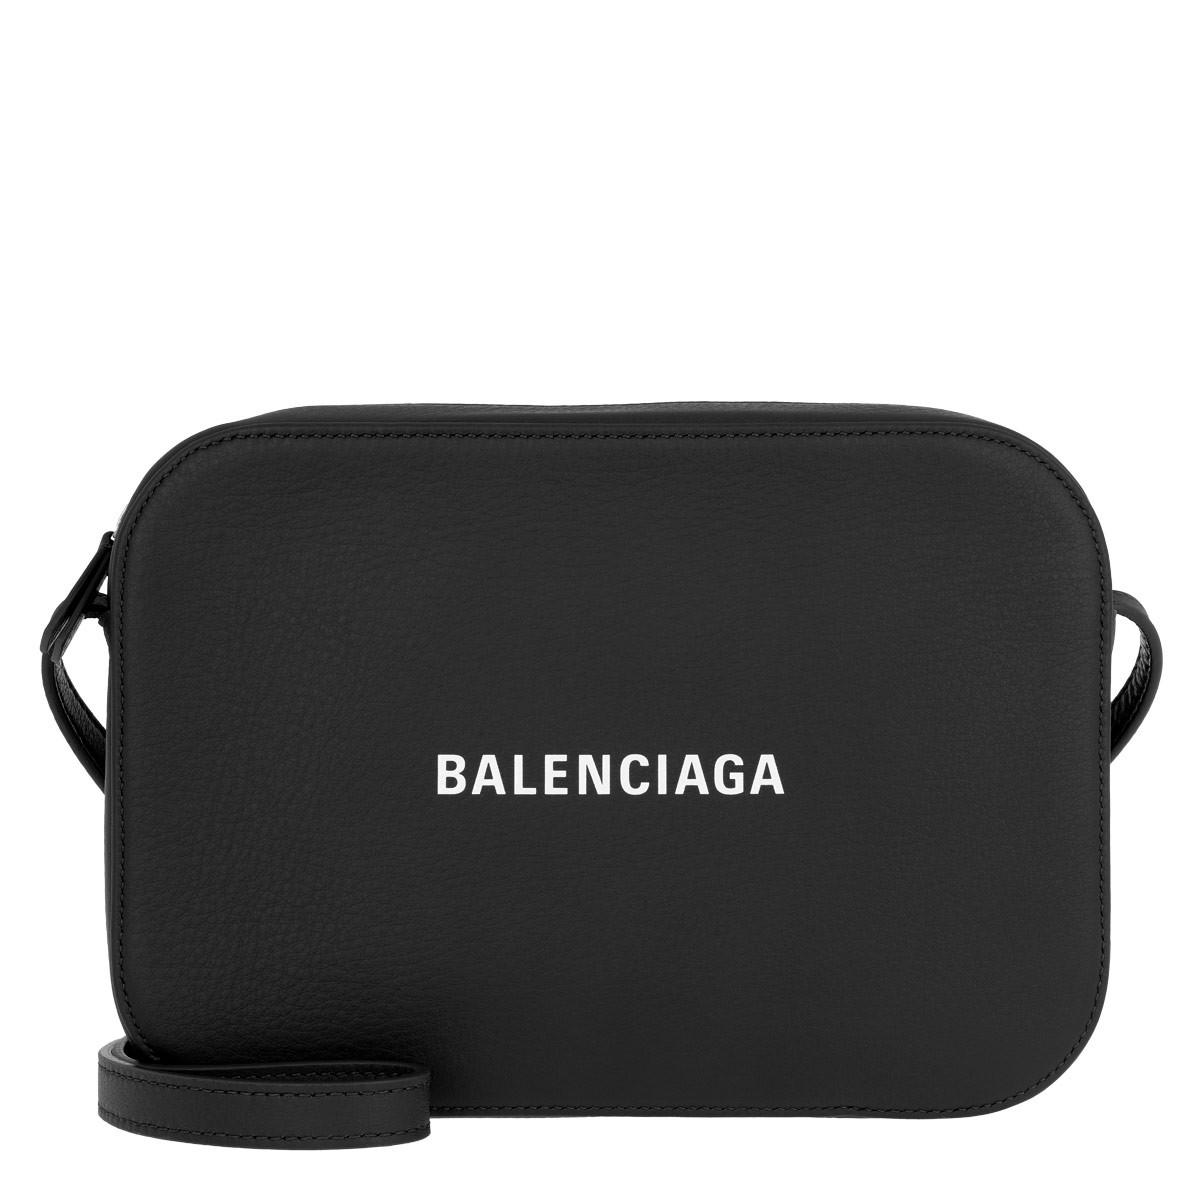 Balenciaga Everyday Camera Bag S Black at FORZIERI